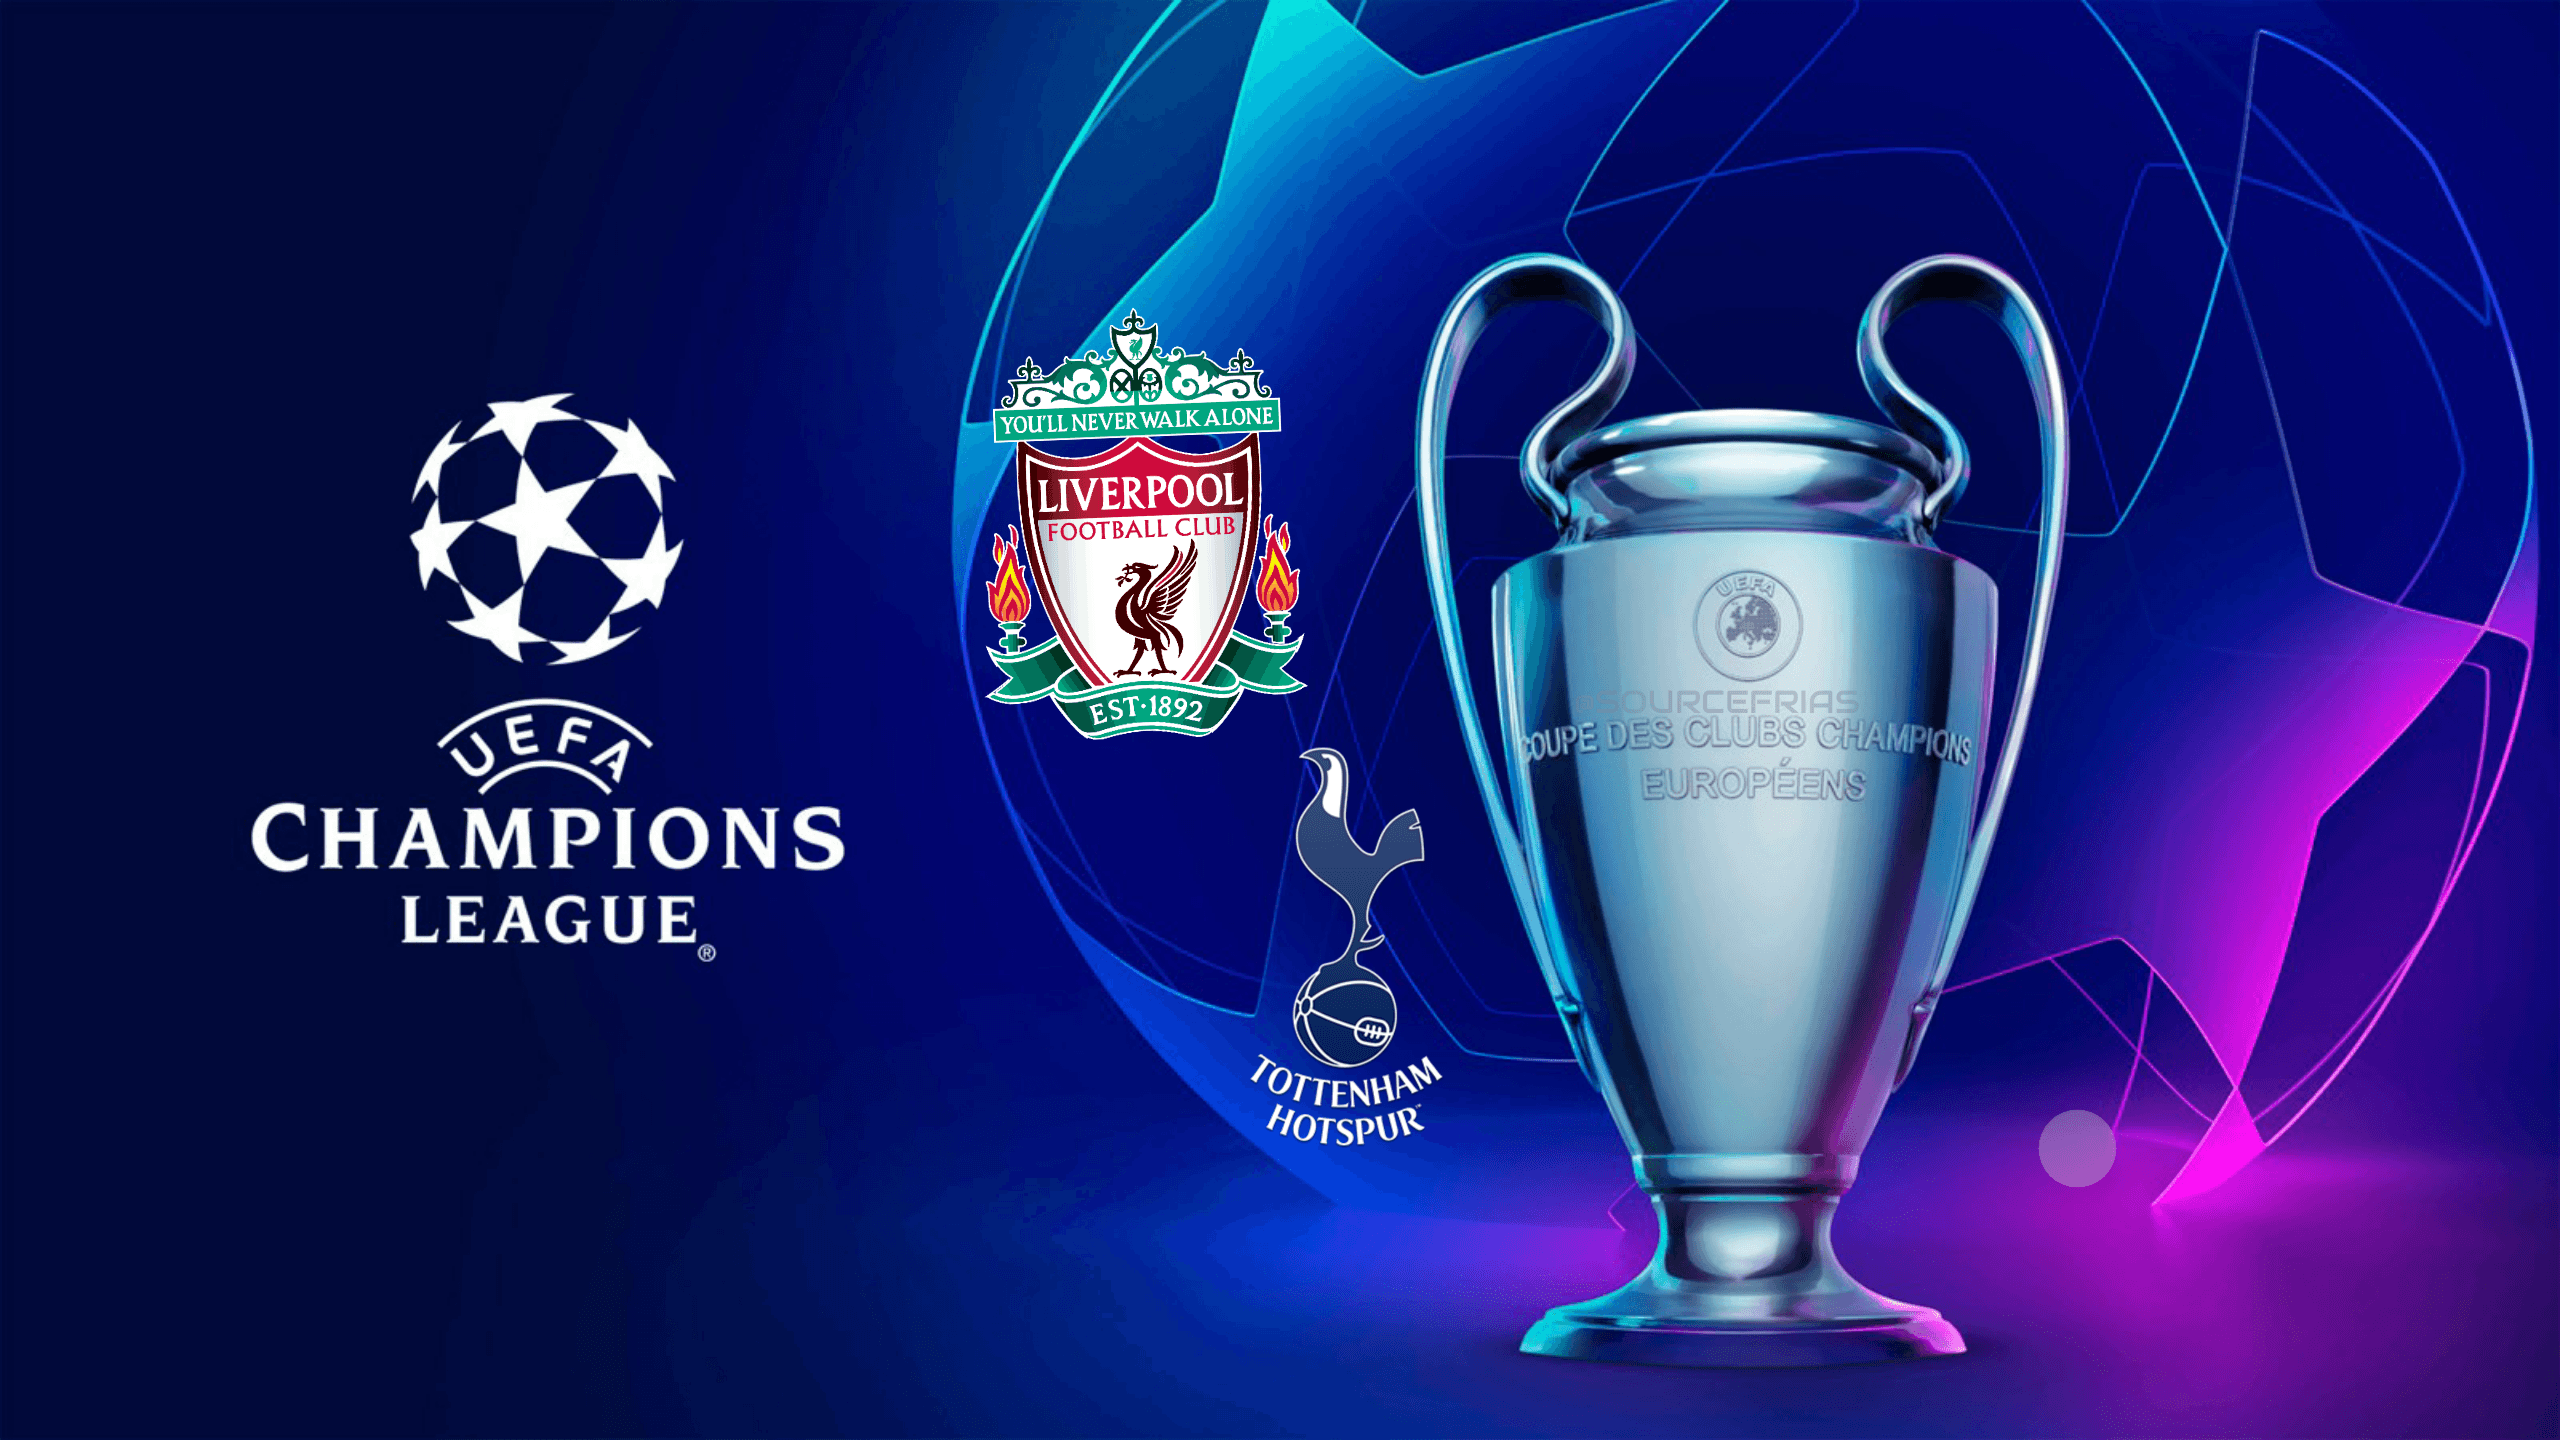 Champions League Final 2019 vs Tottenham in Sport